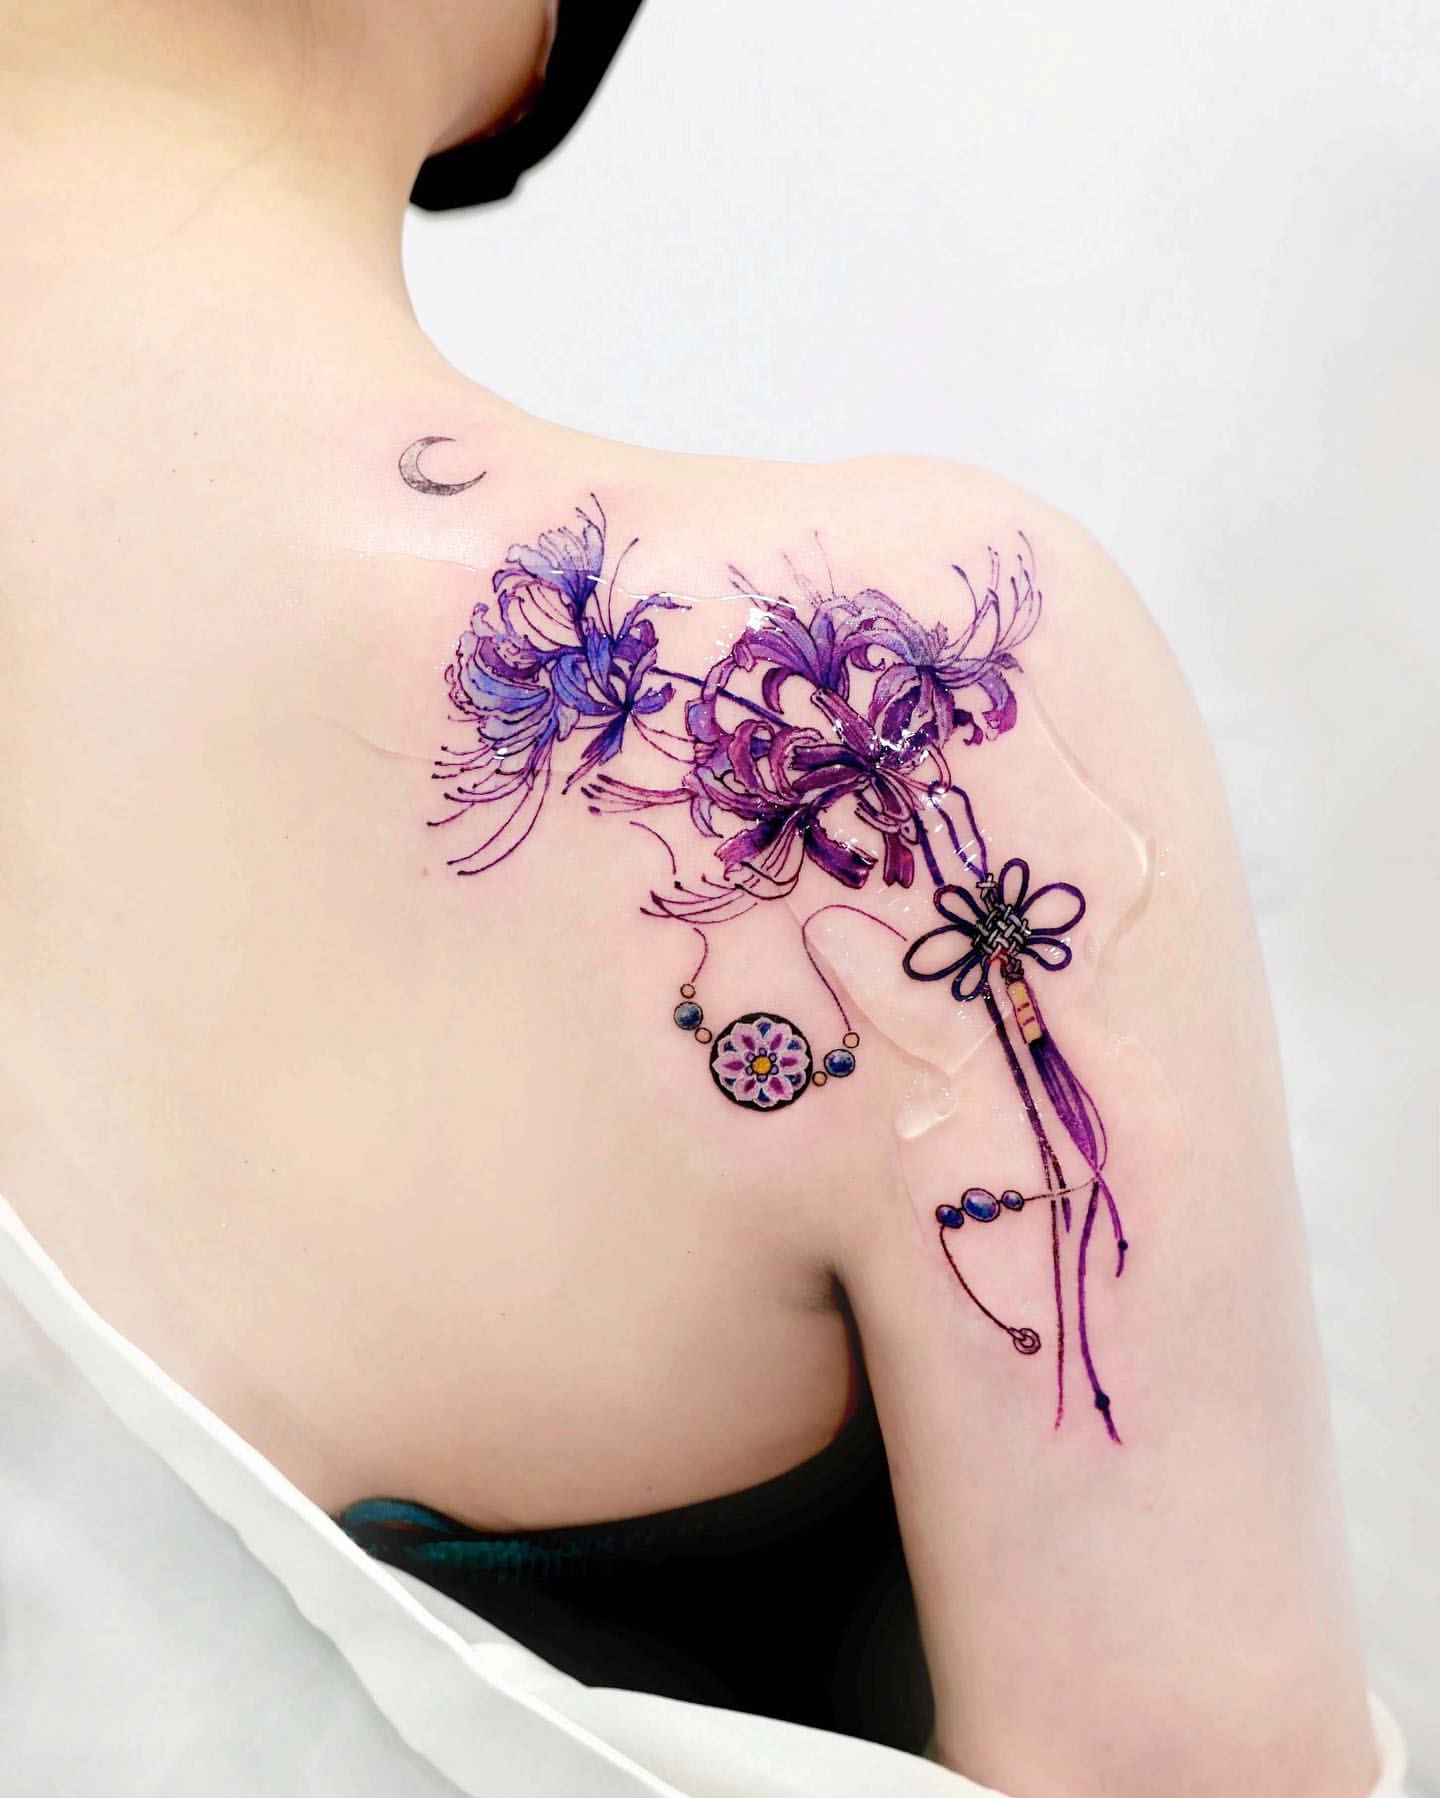 Spider Lily Tattoo Ideas 25